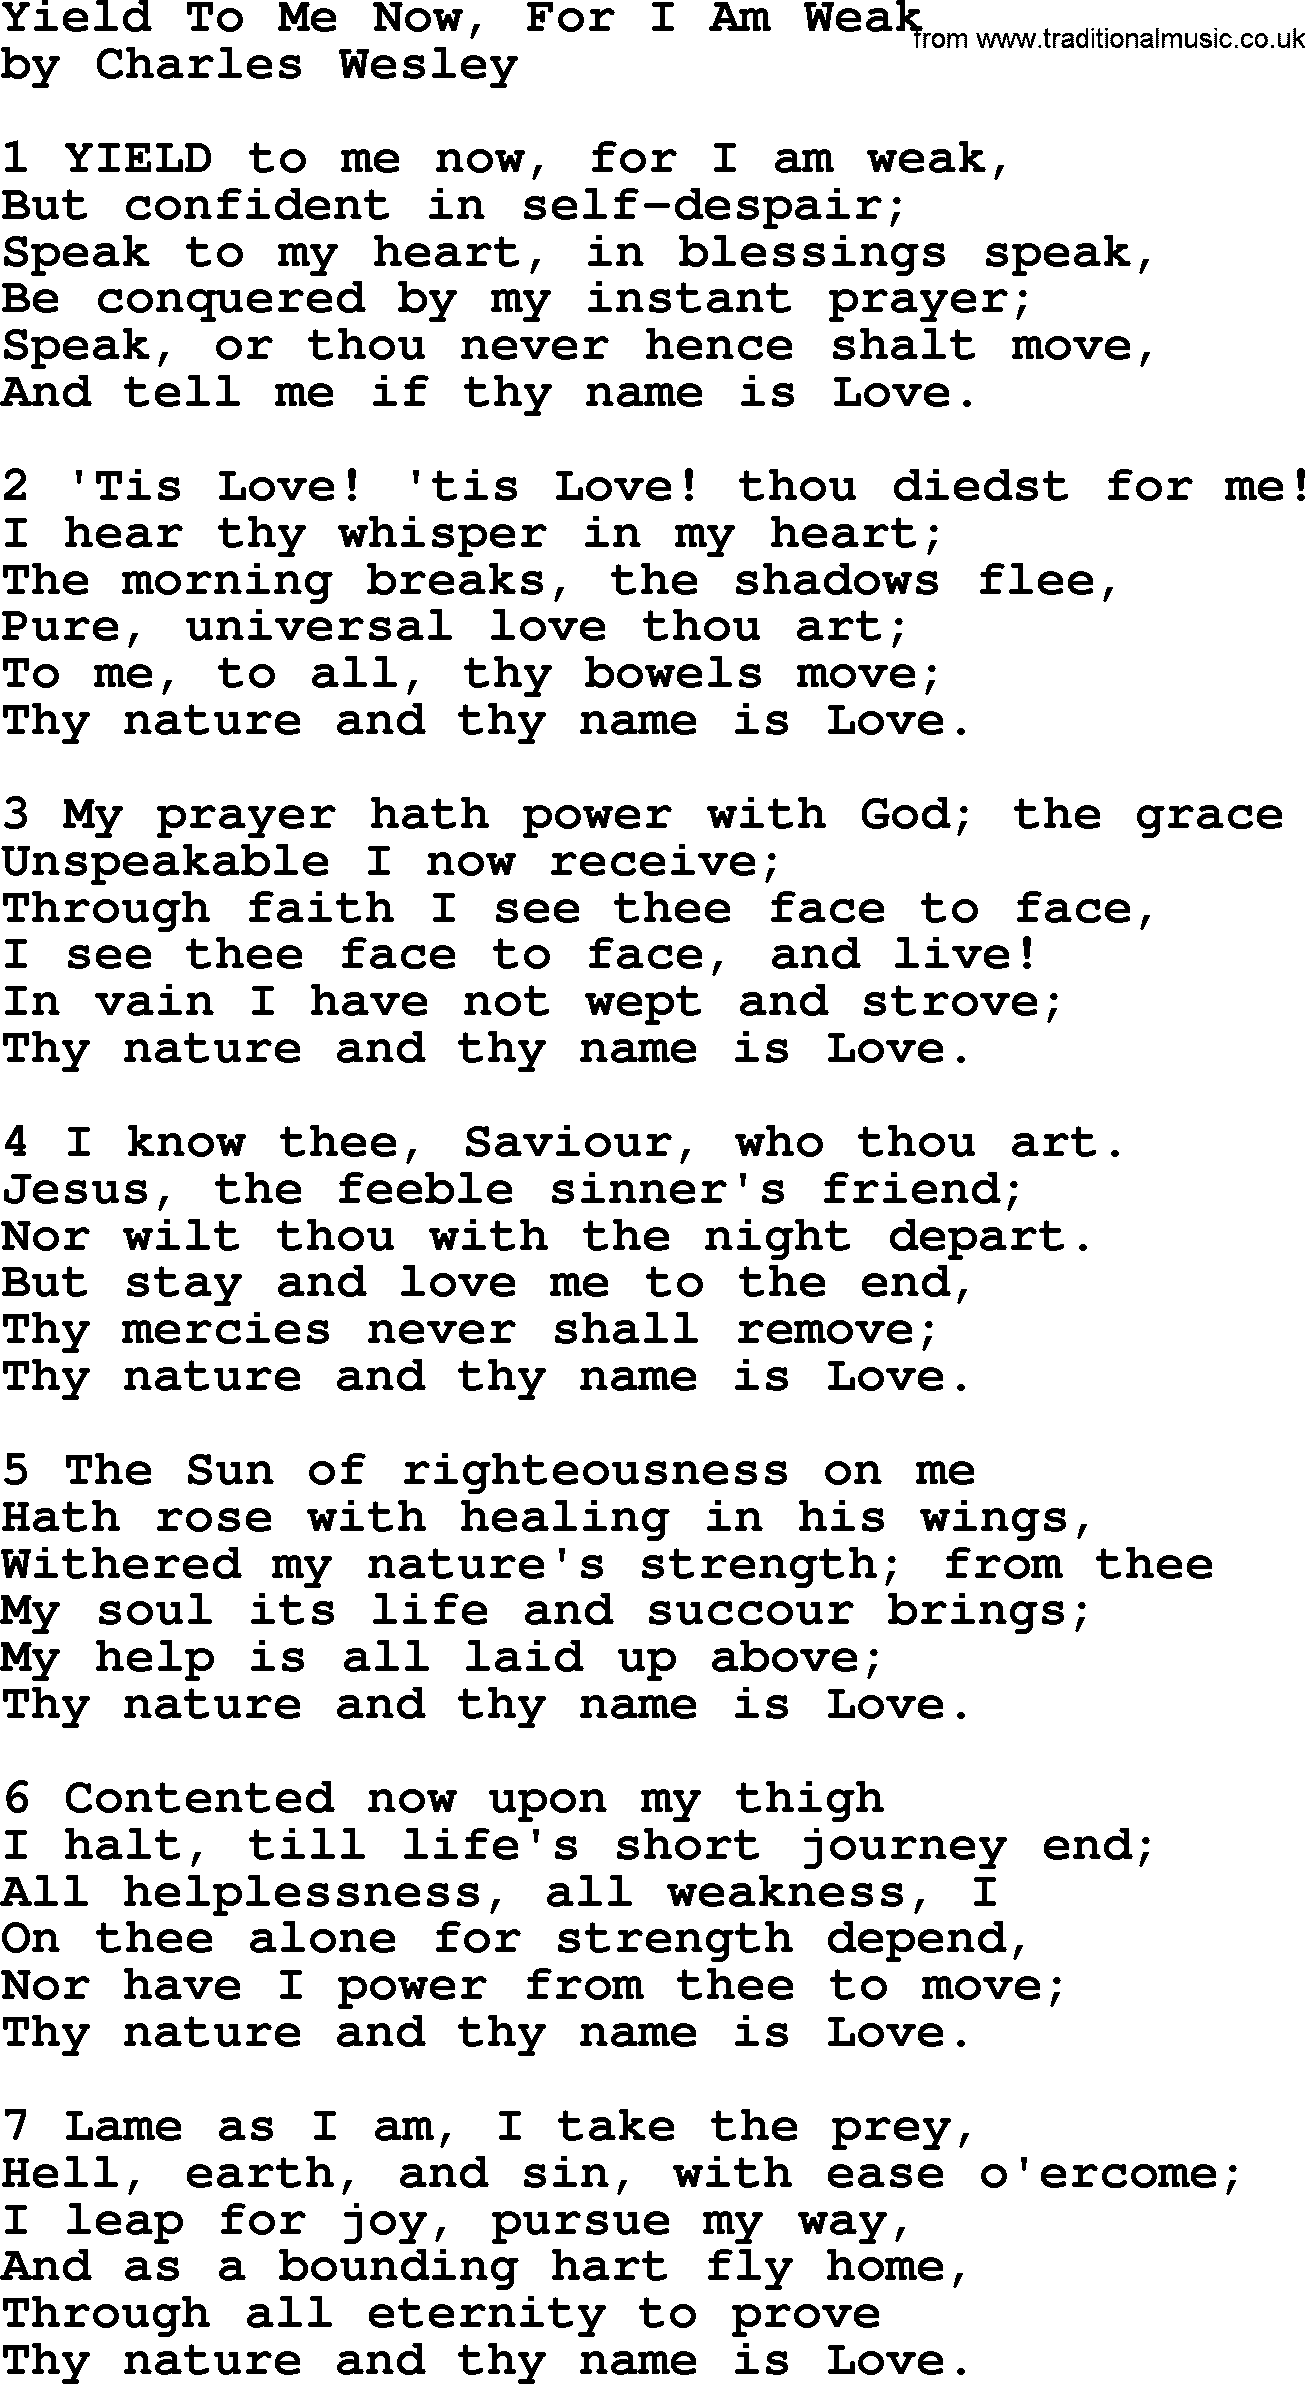 Charles Wesley hymn: Yield To Me Now, For I Am Weak, lyrics